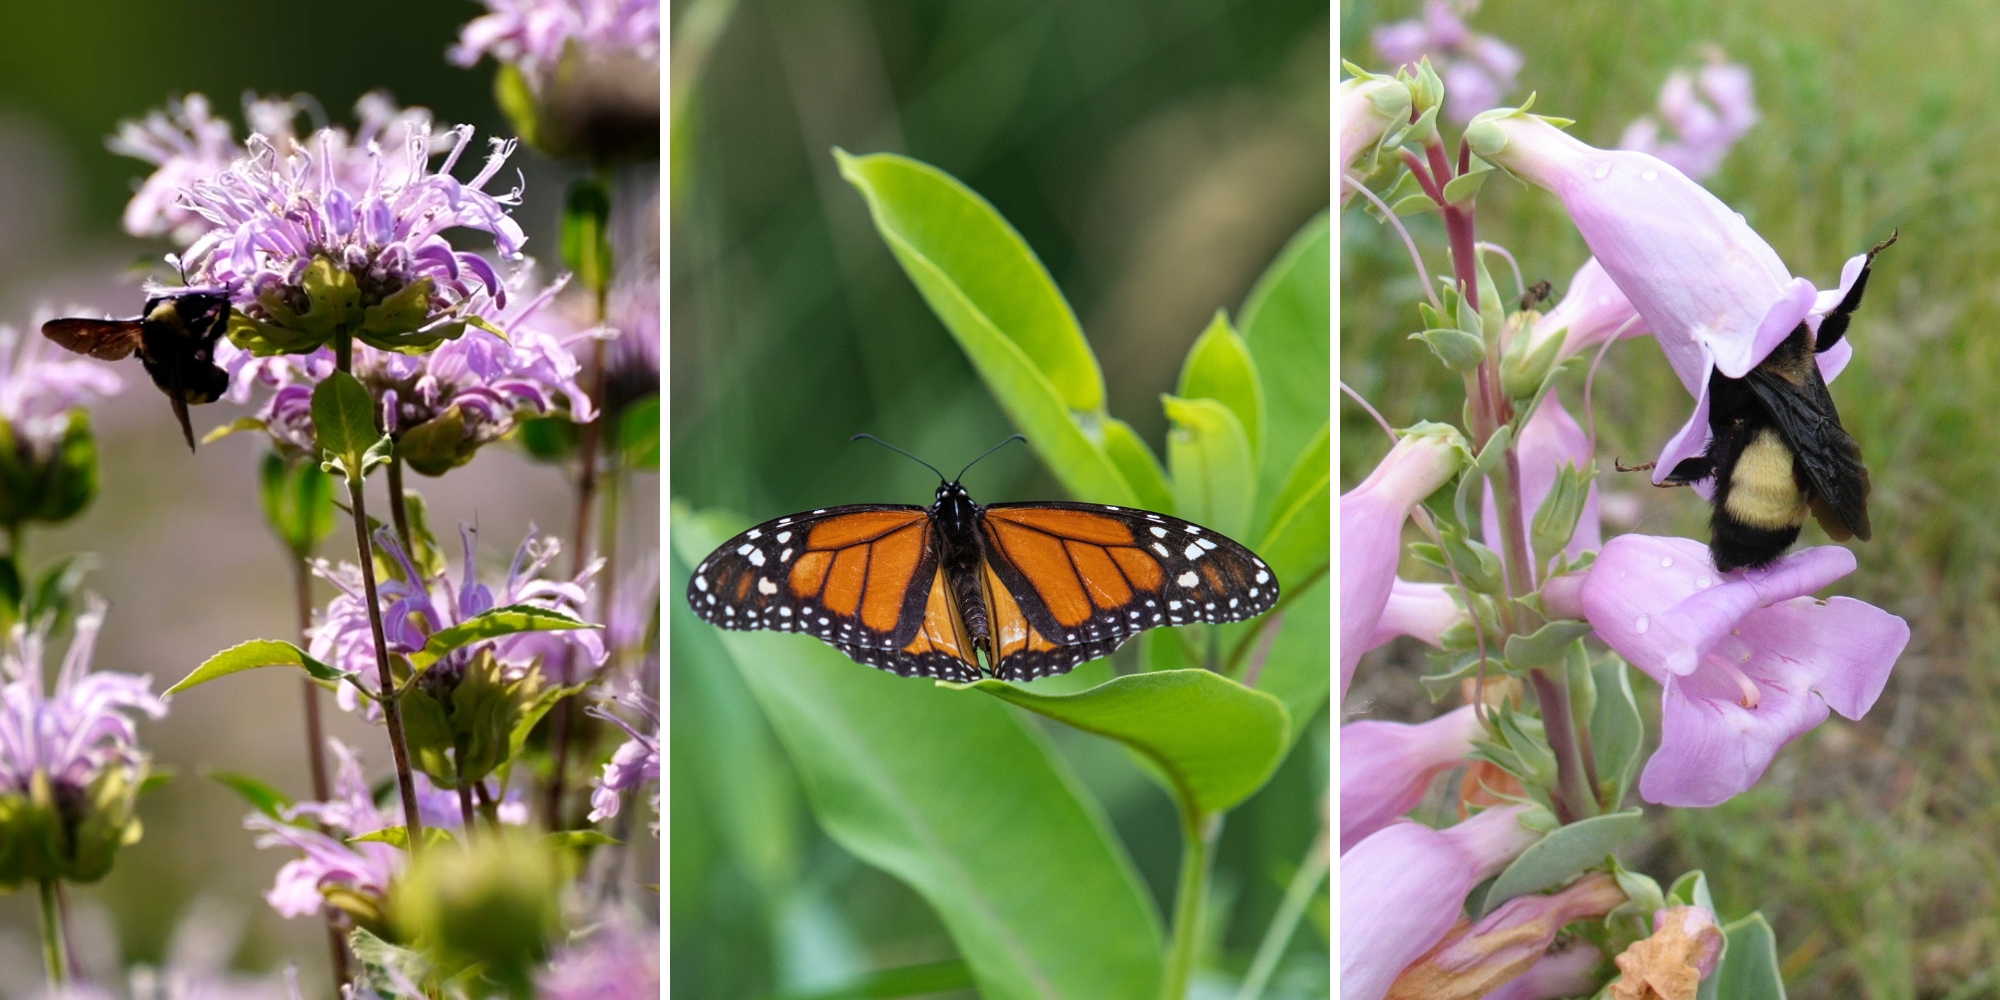 Three pollinators on native plants